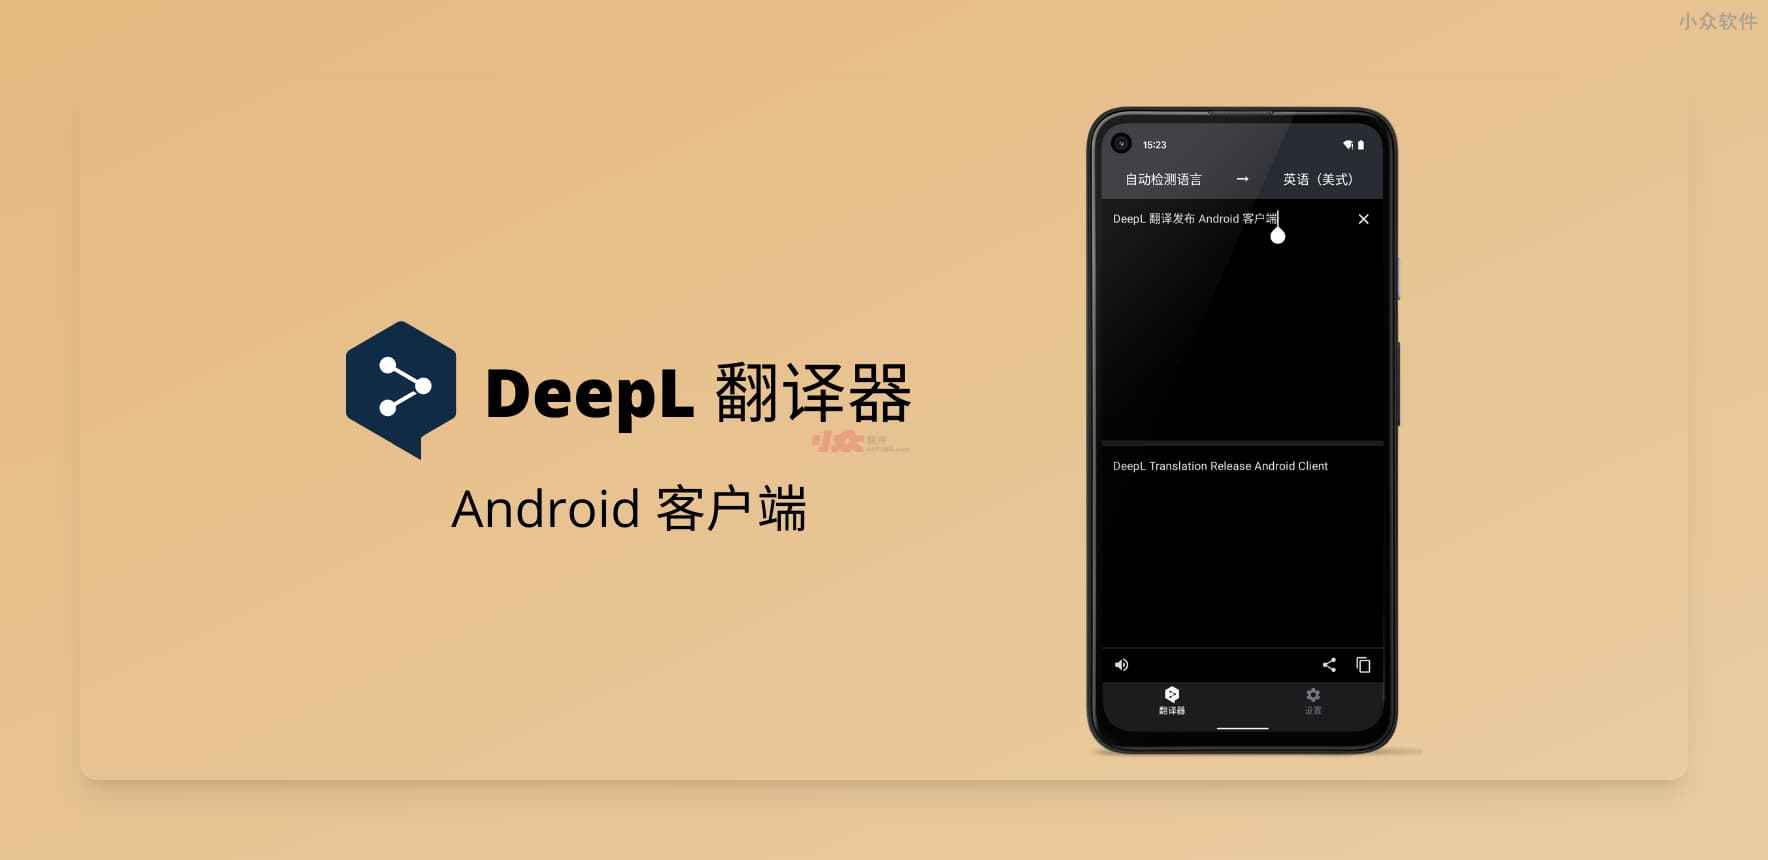 DeepL 翻译 Android 版本发布